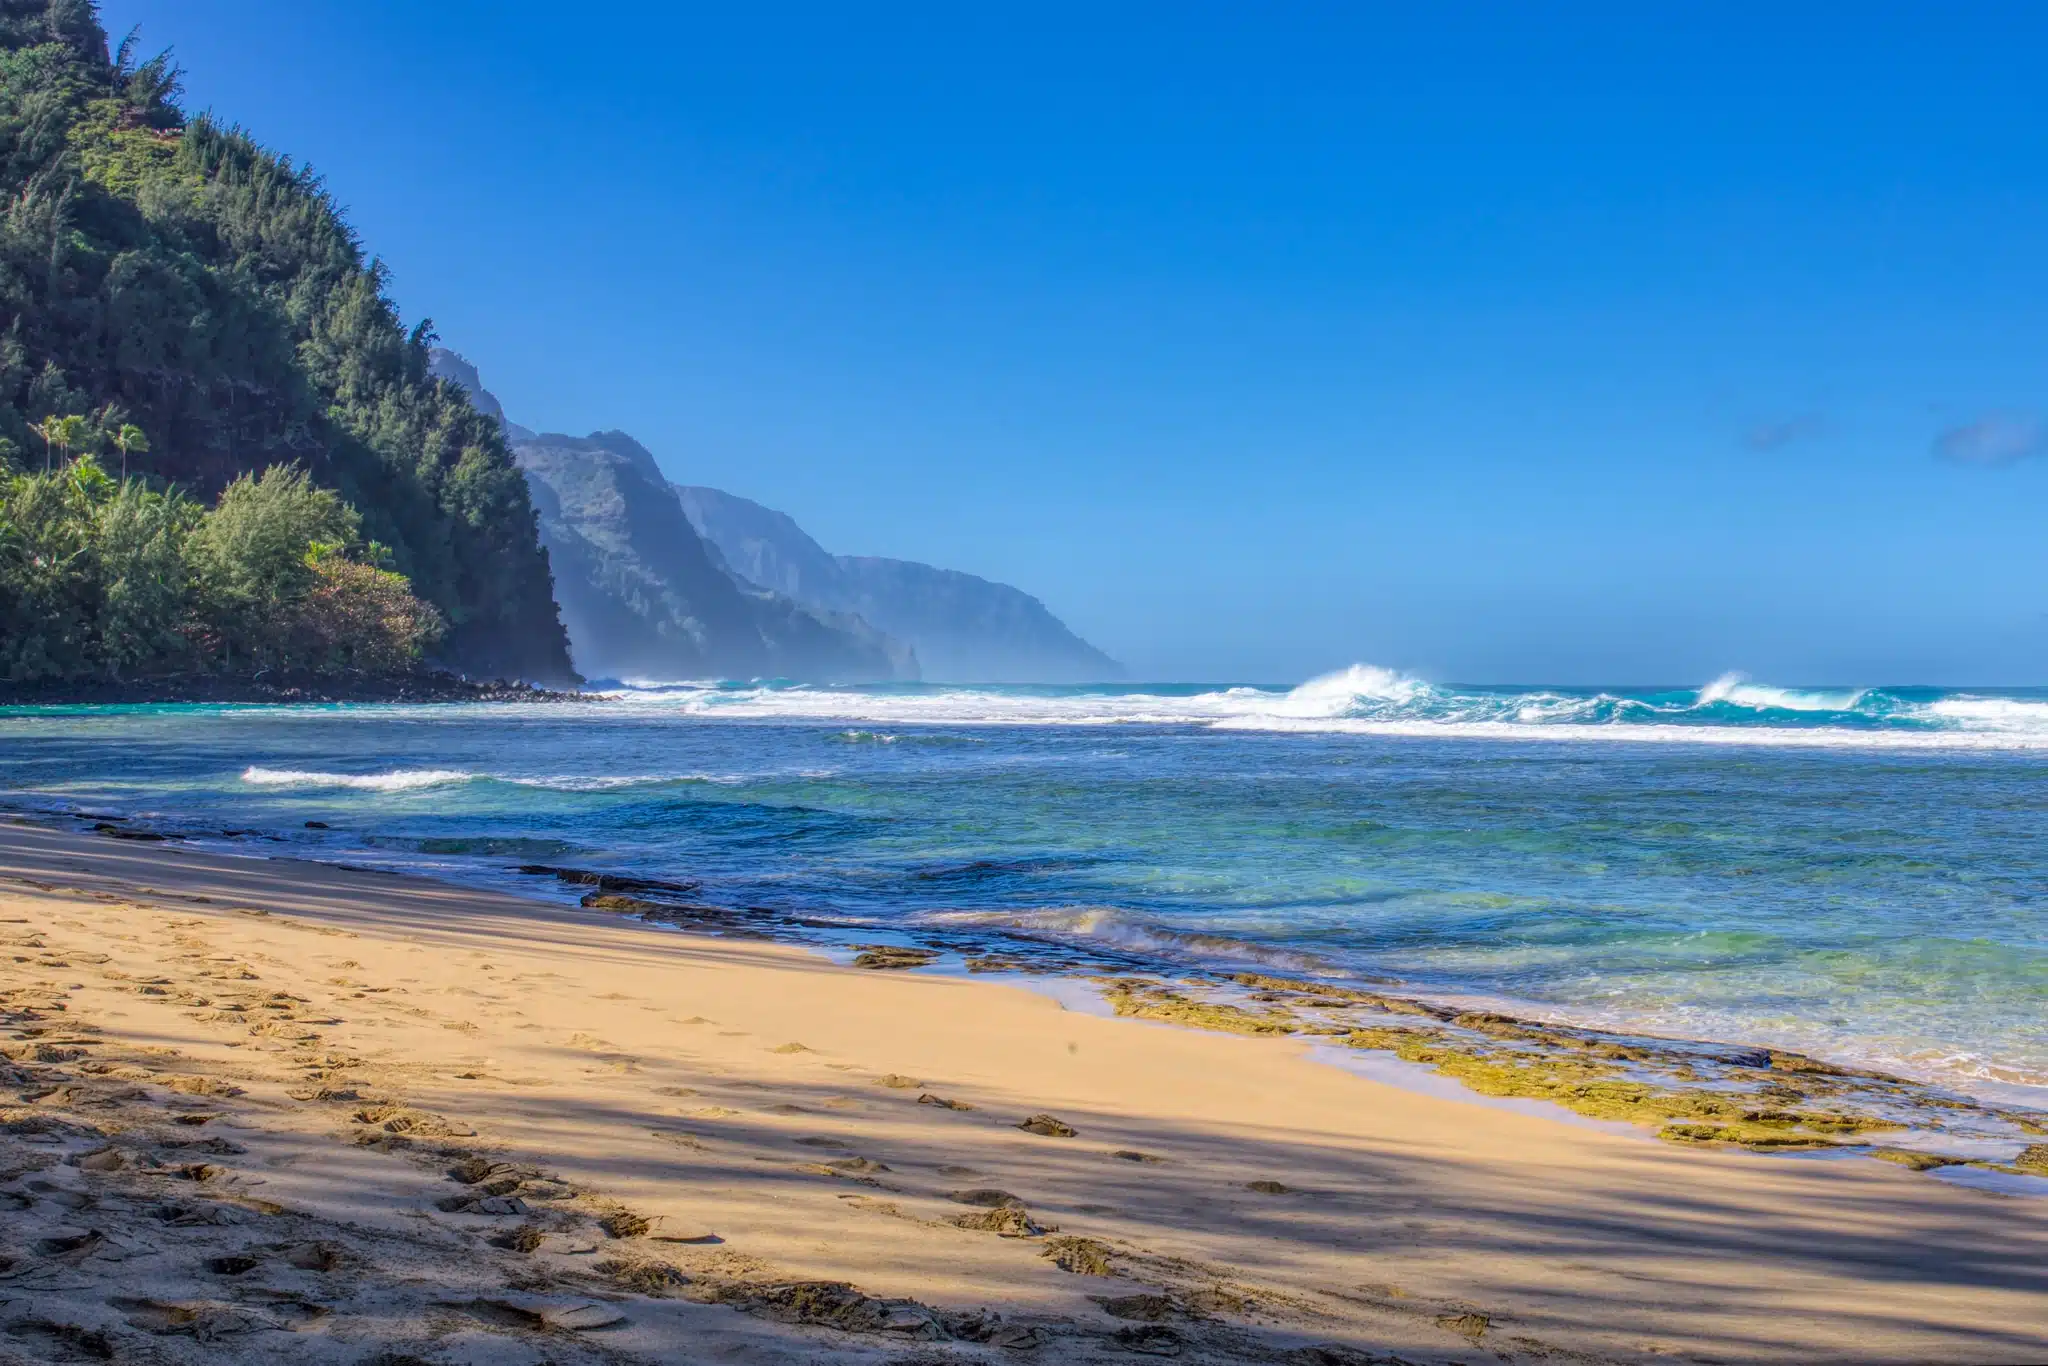 Ke'e Beach is a Beach located in the city of Hanalei on Kauai, Hawaii